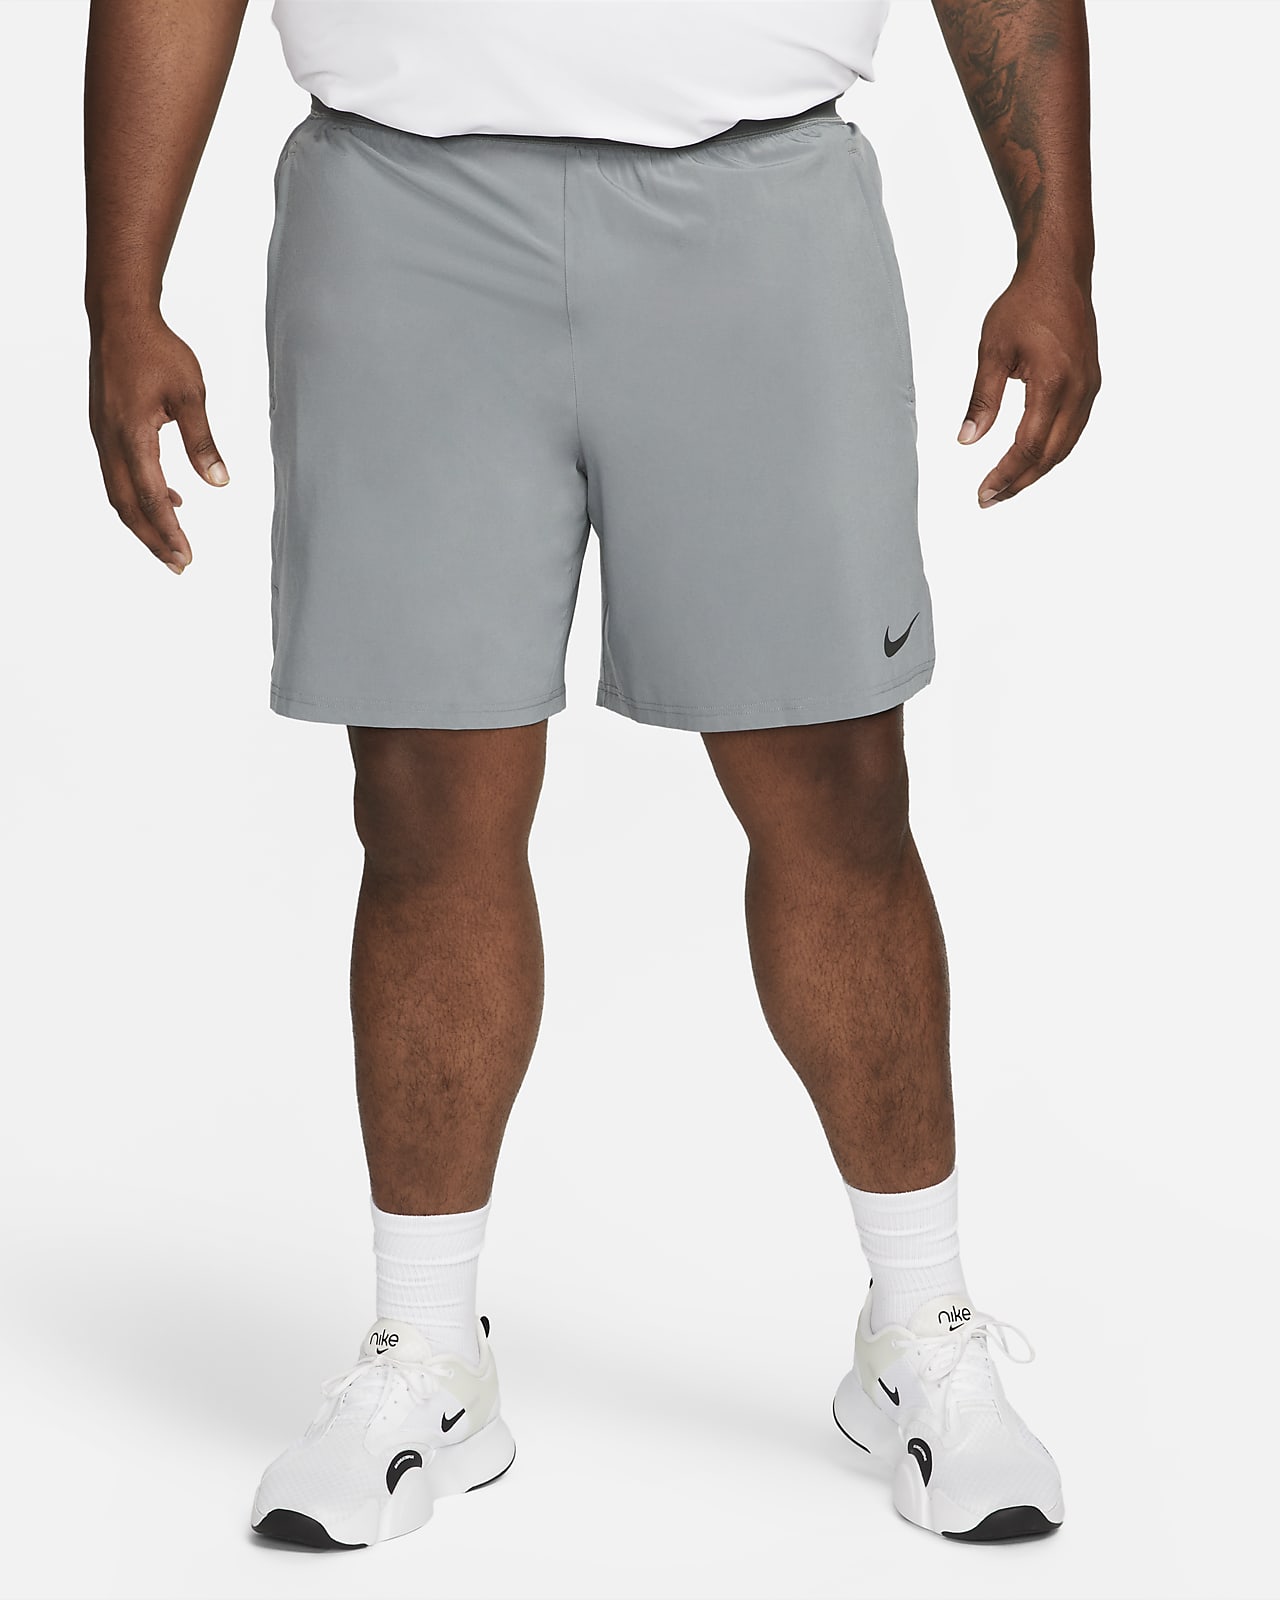  Nike Men's Flex Vent Max Men's Dri-FIT Fleece Training Pants,  Particle Grey/Black, Small : Clothing, Shoes & Jewelry